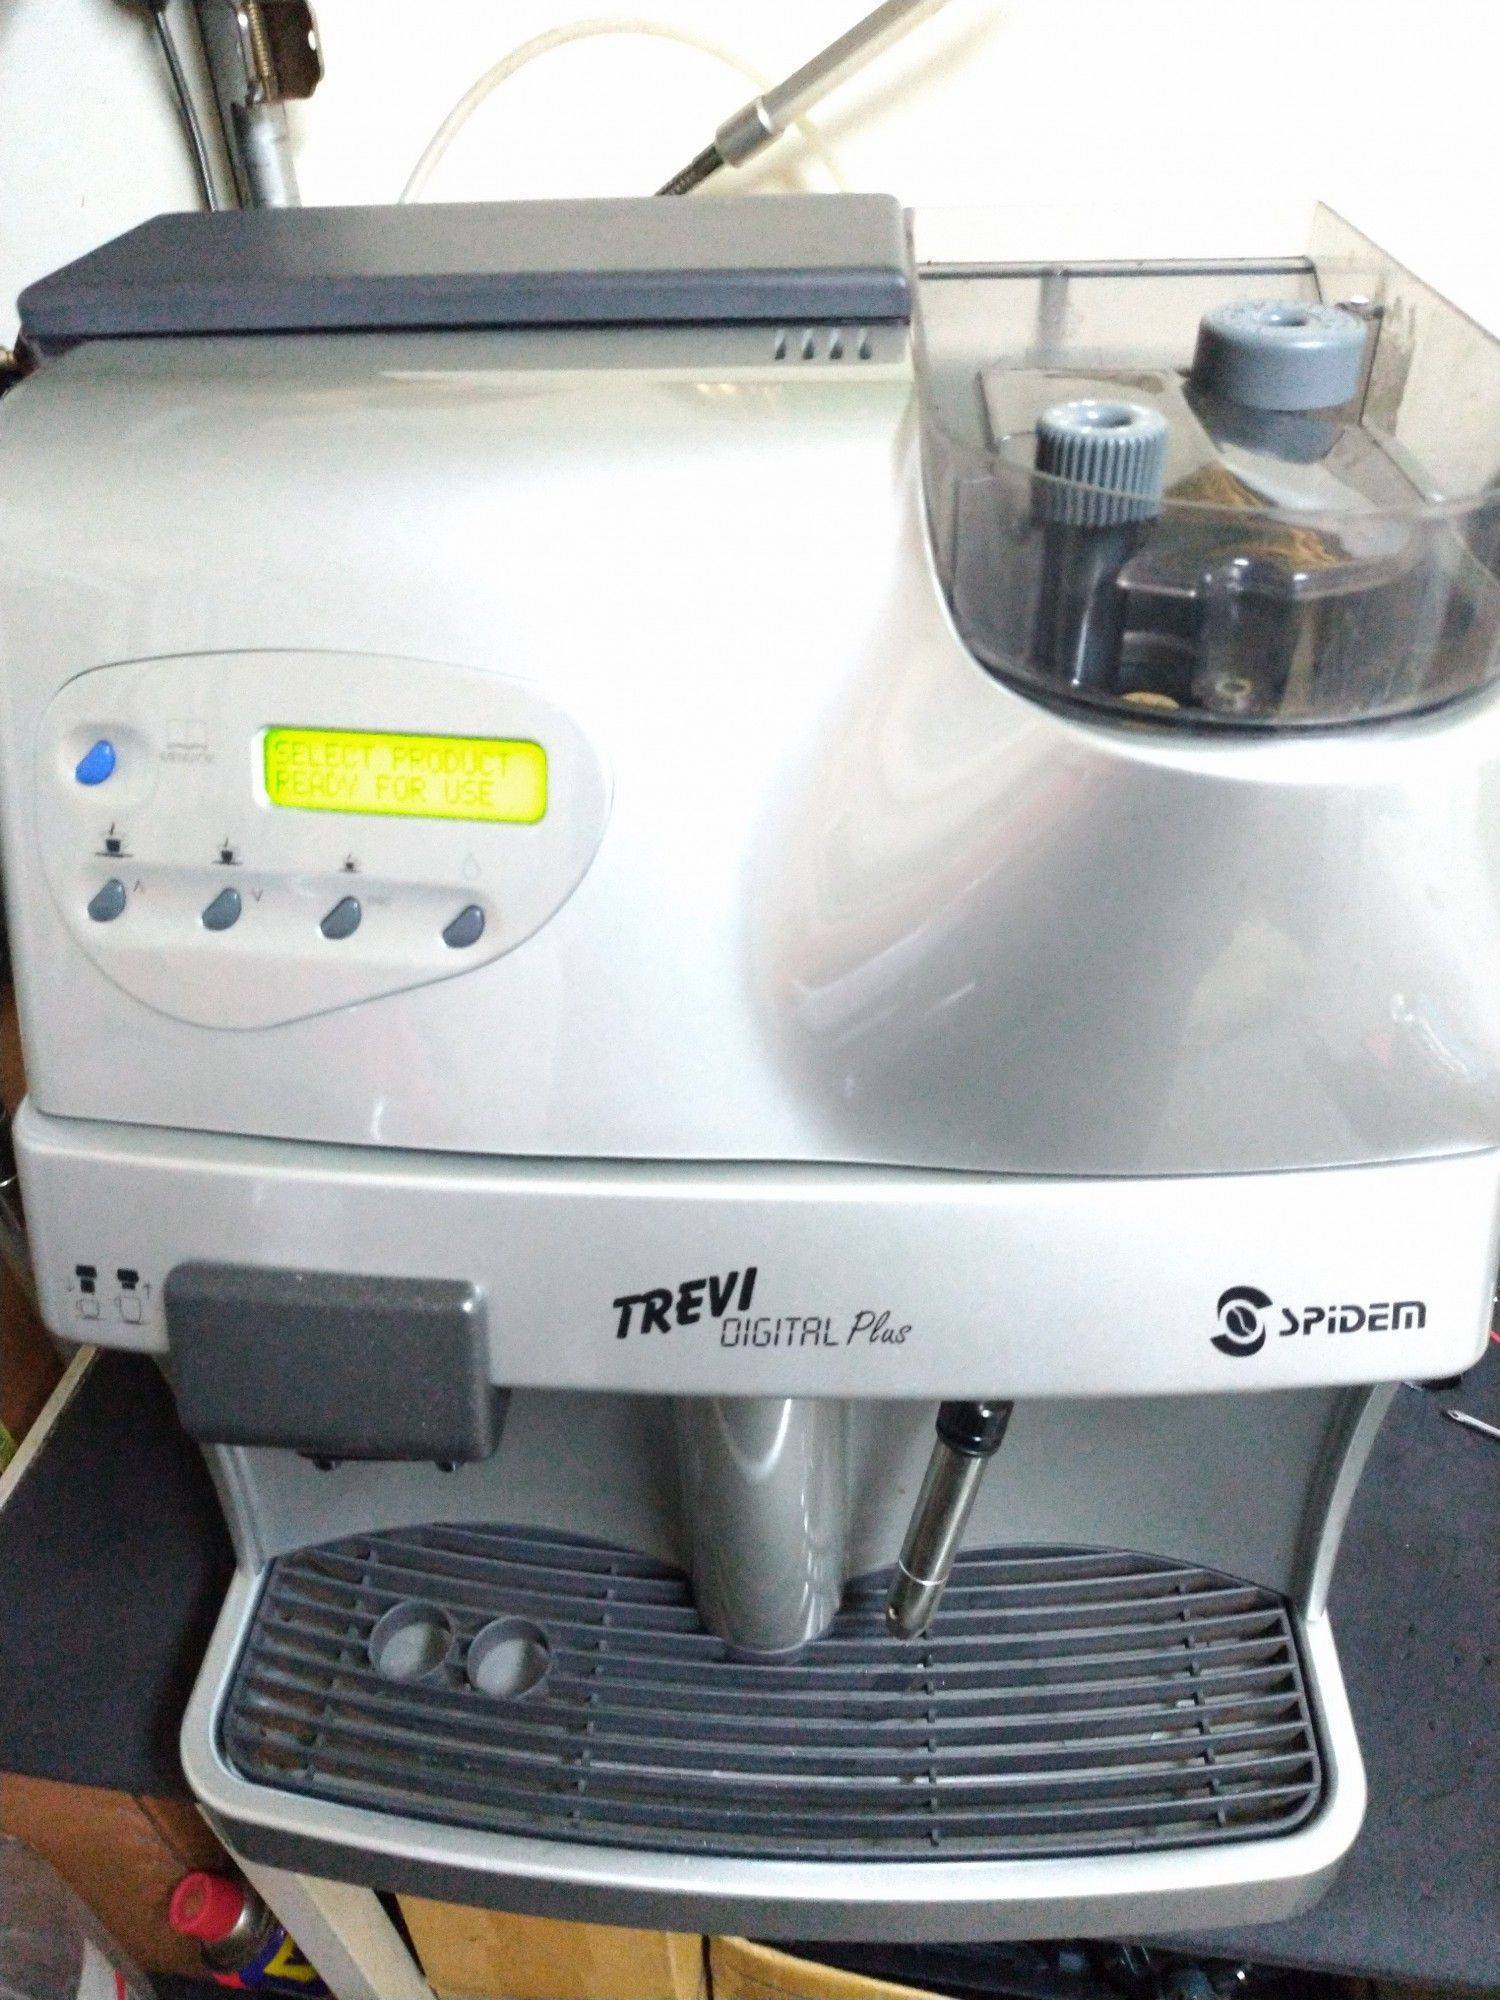 saeco-trevl-中古全自動咖啡機